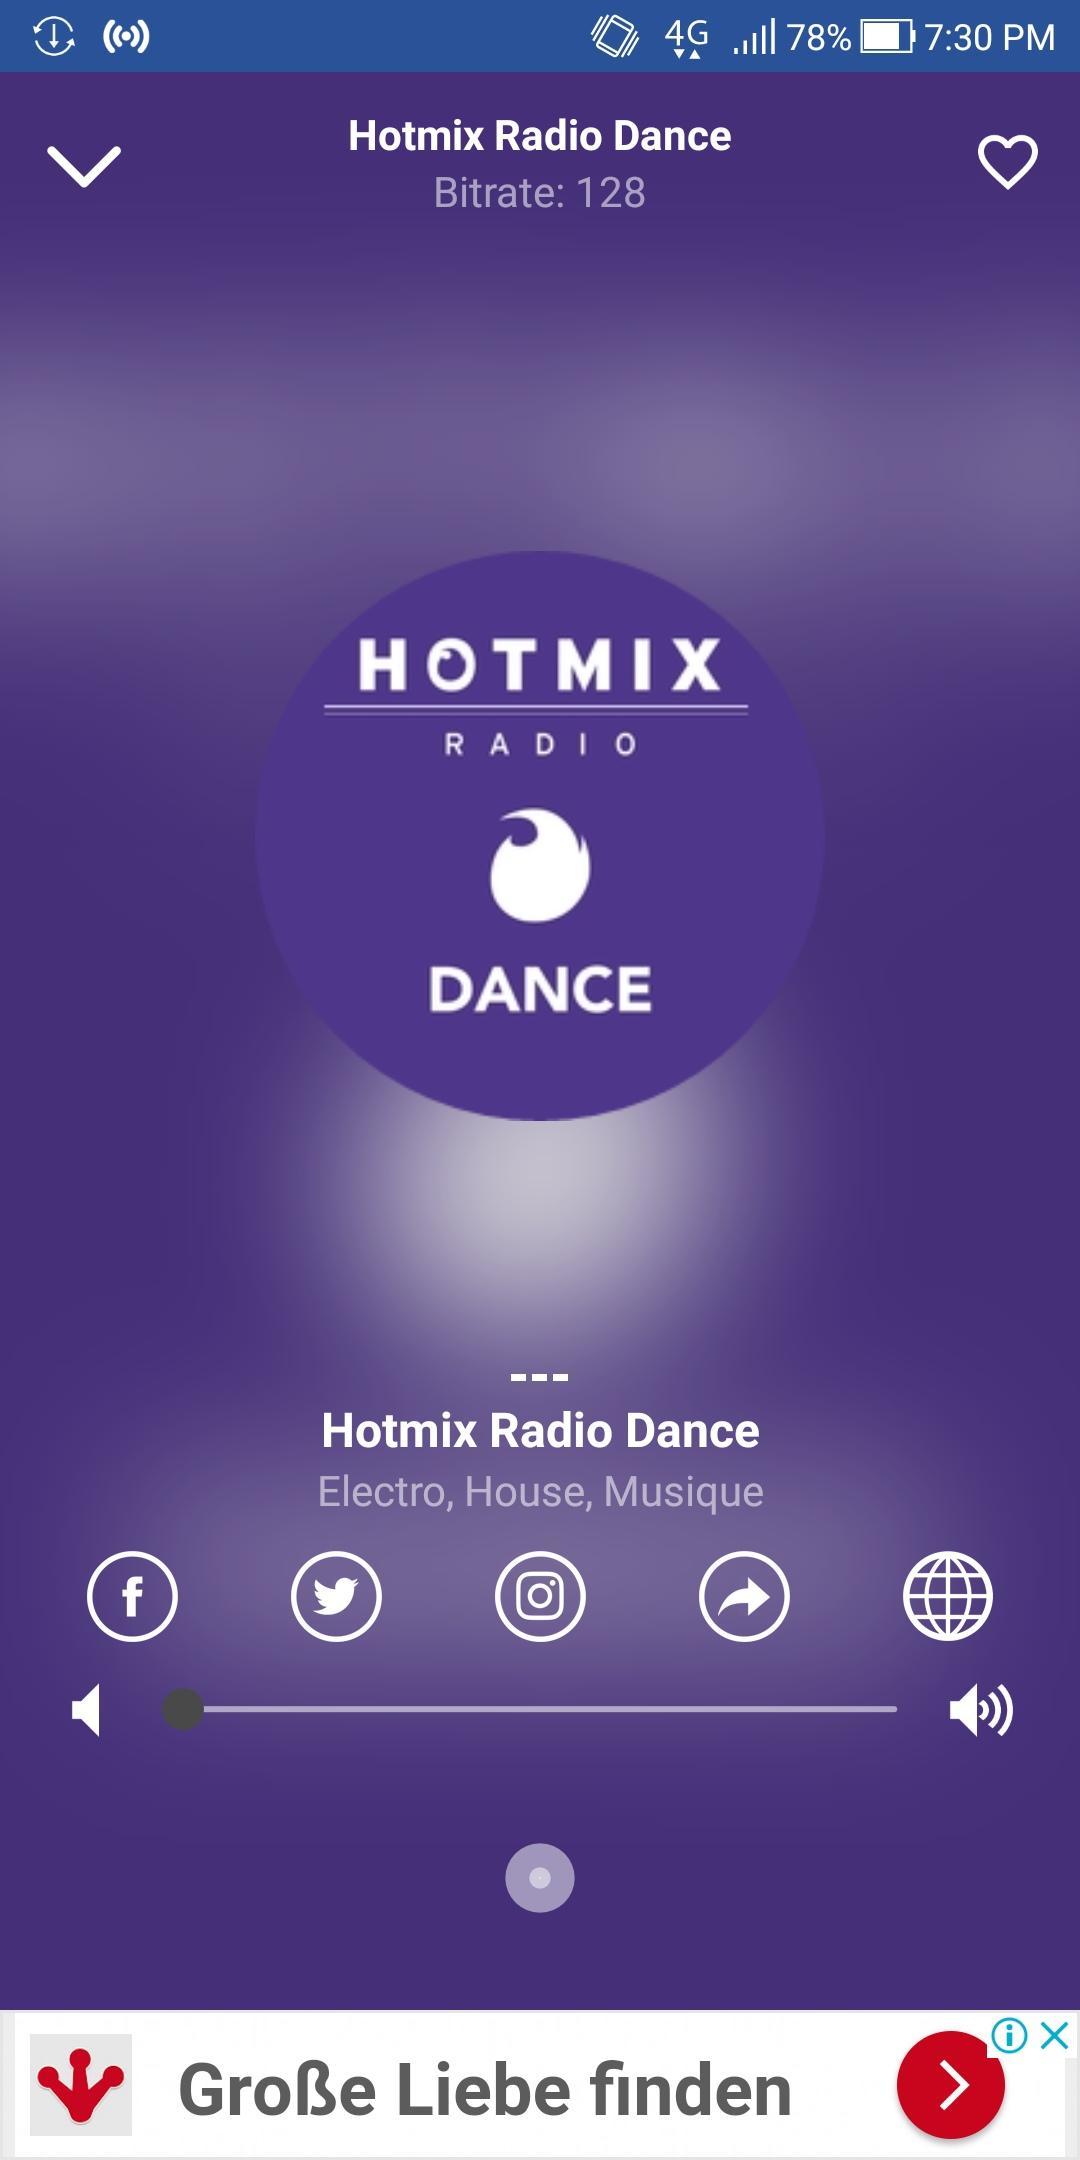 Hotmix Radio Dance - Radios de France for Android - APK Download